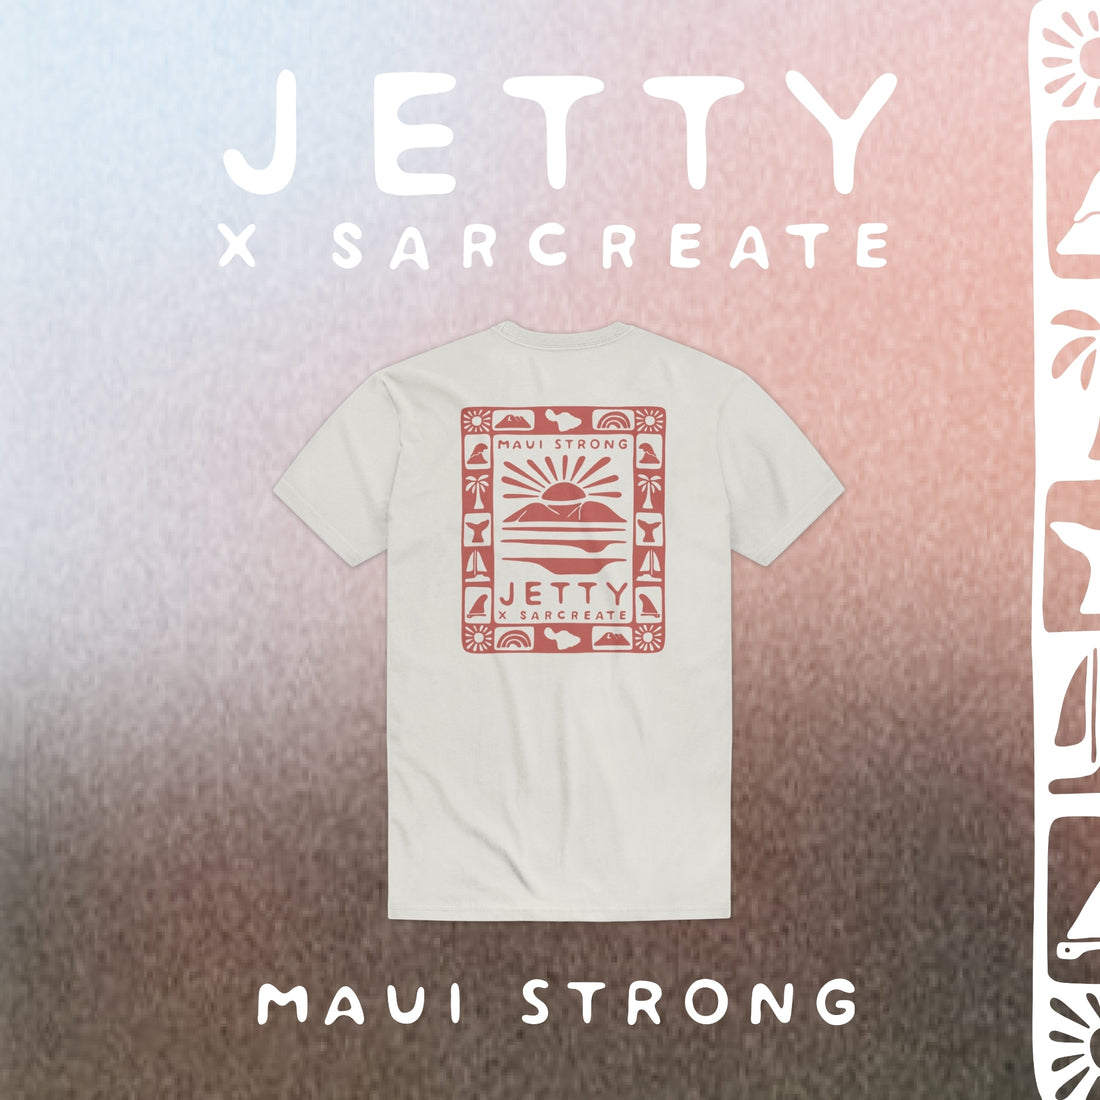 Maui Strong: Jetty x Sarcreate